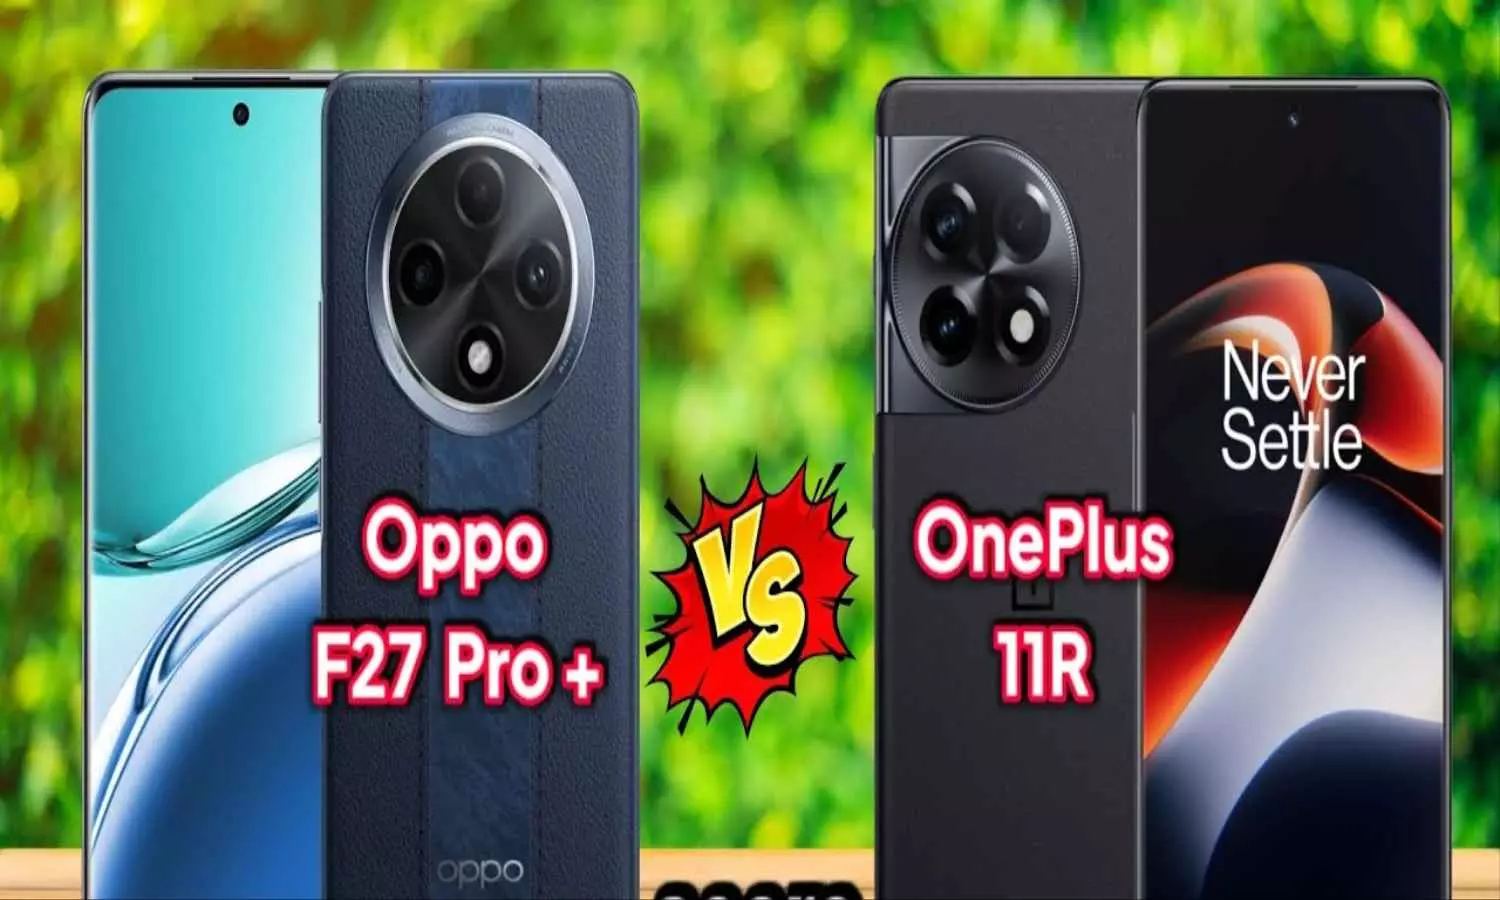 OnePlus 11R vs OPPO F27 Pro+ 5G